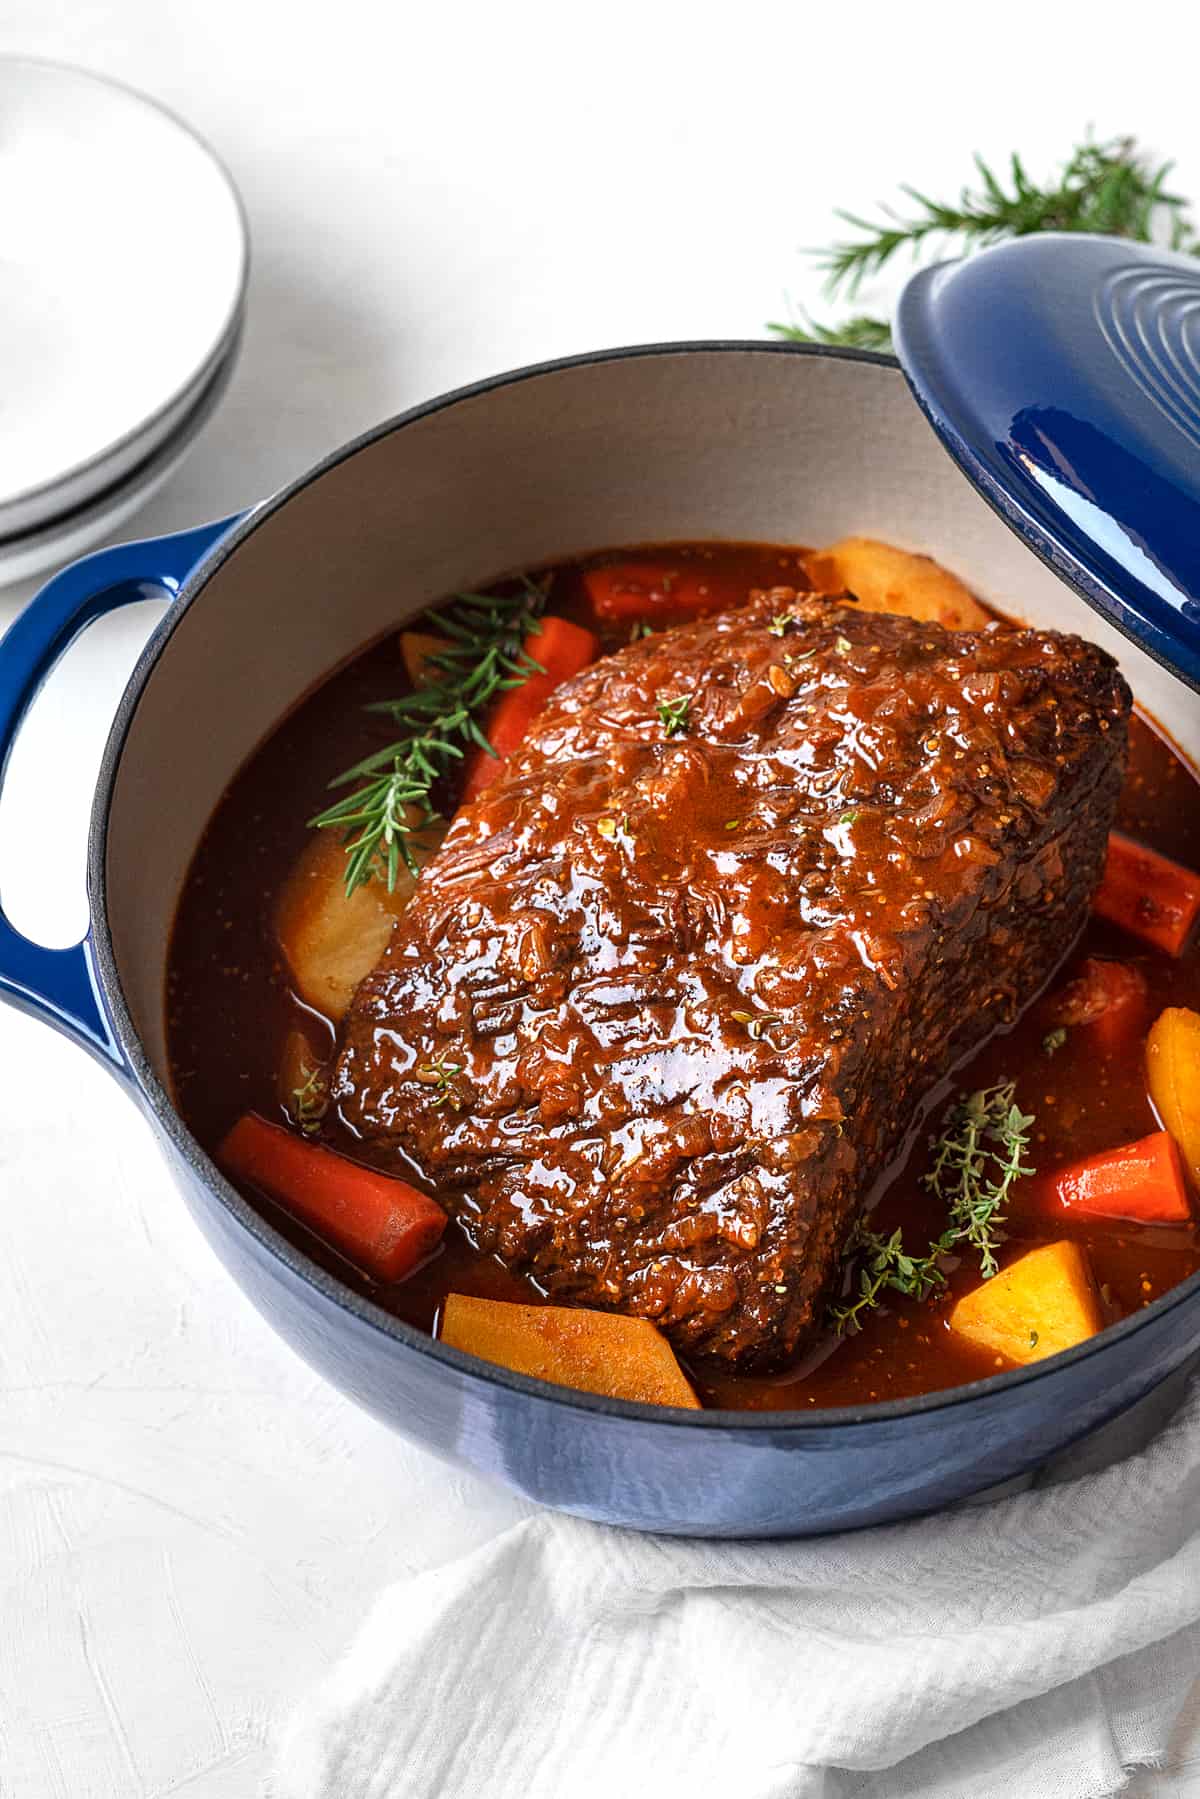 Beef Pot Roast Recipe in the Oven